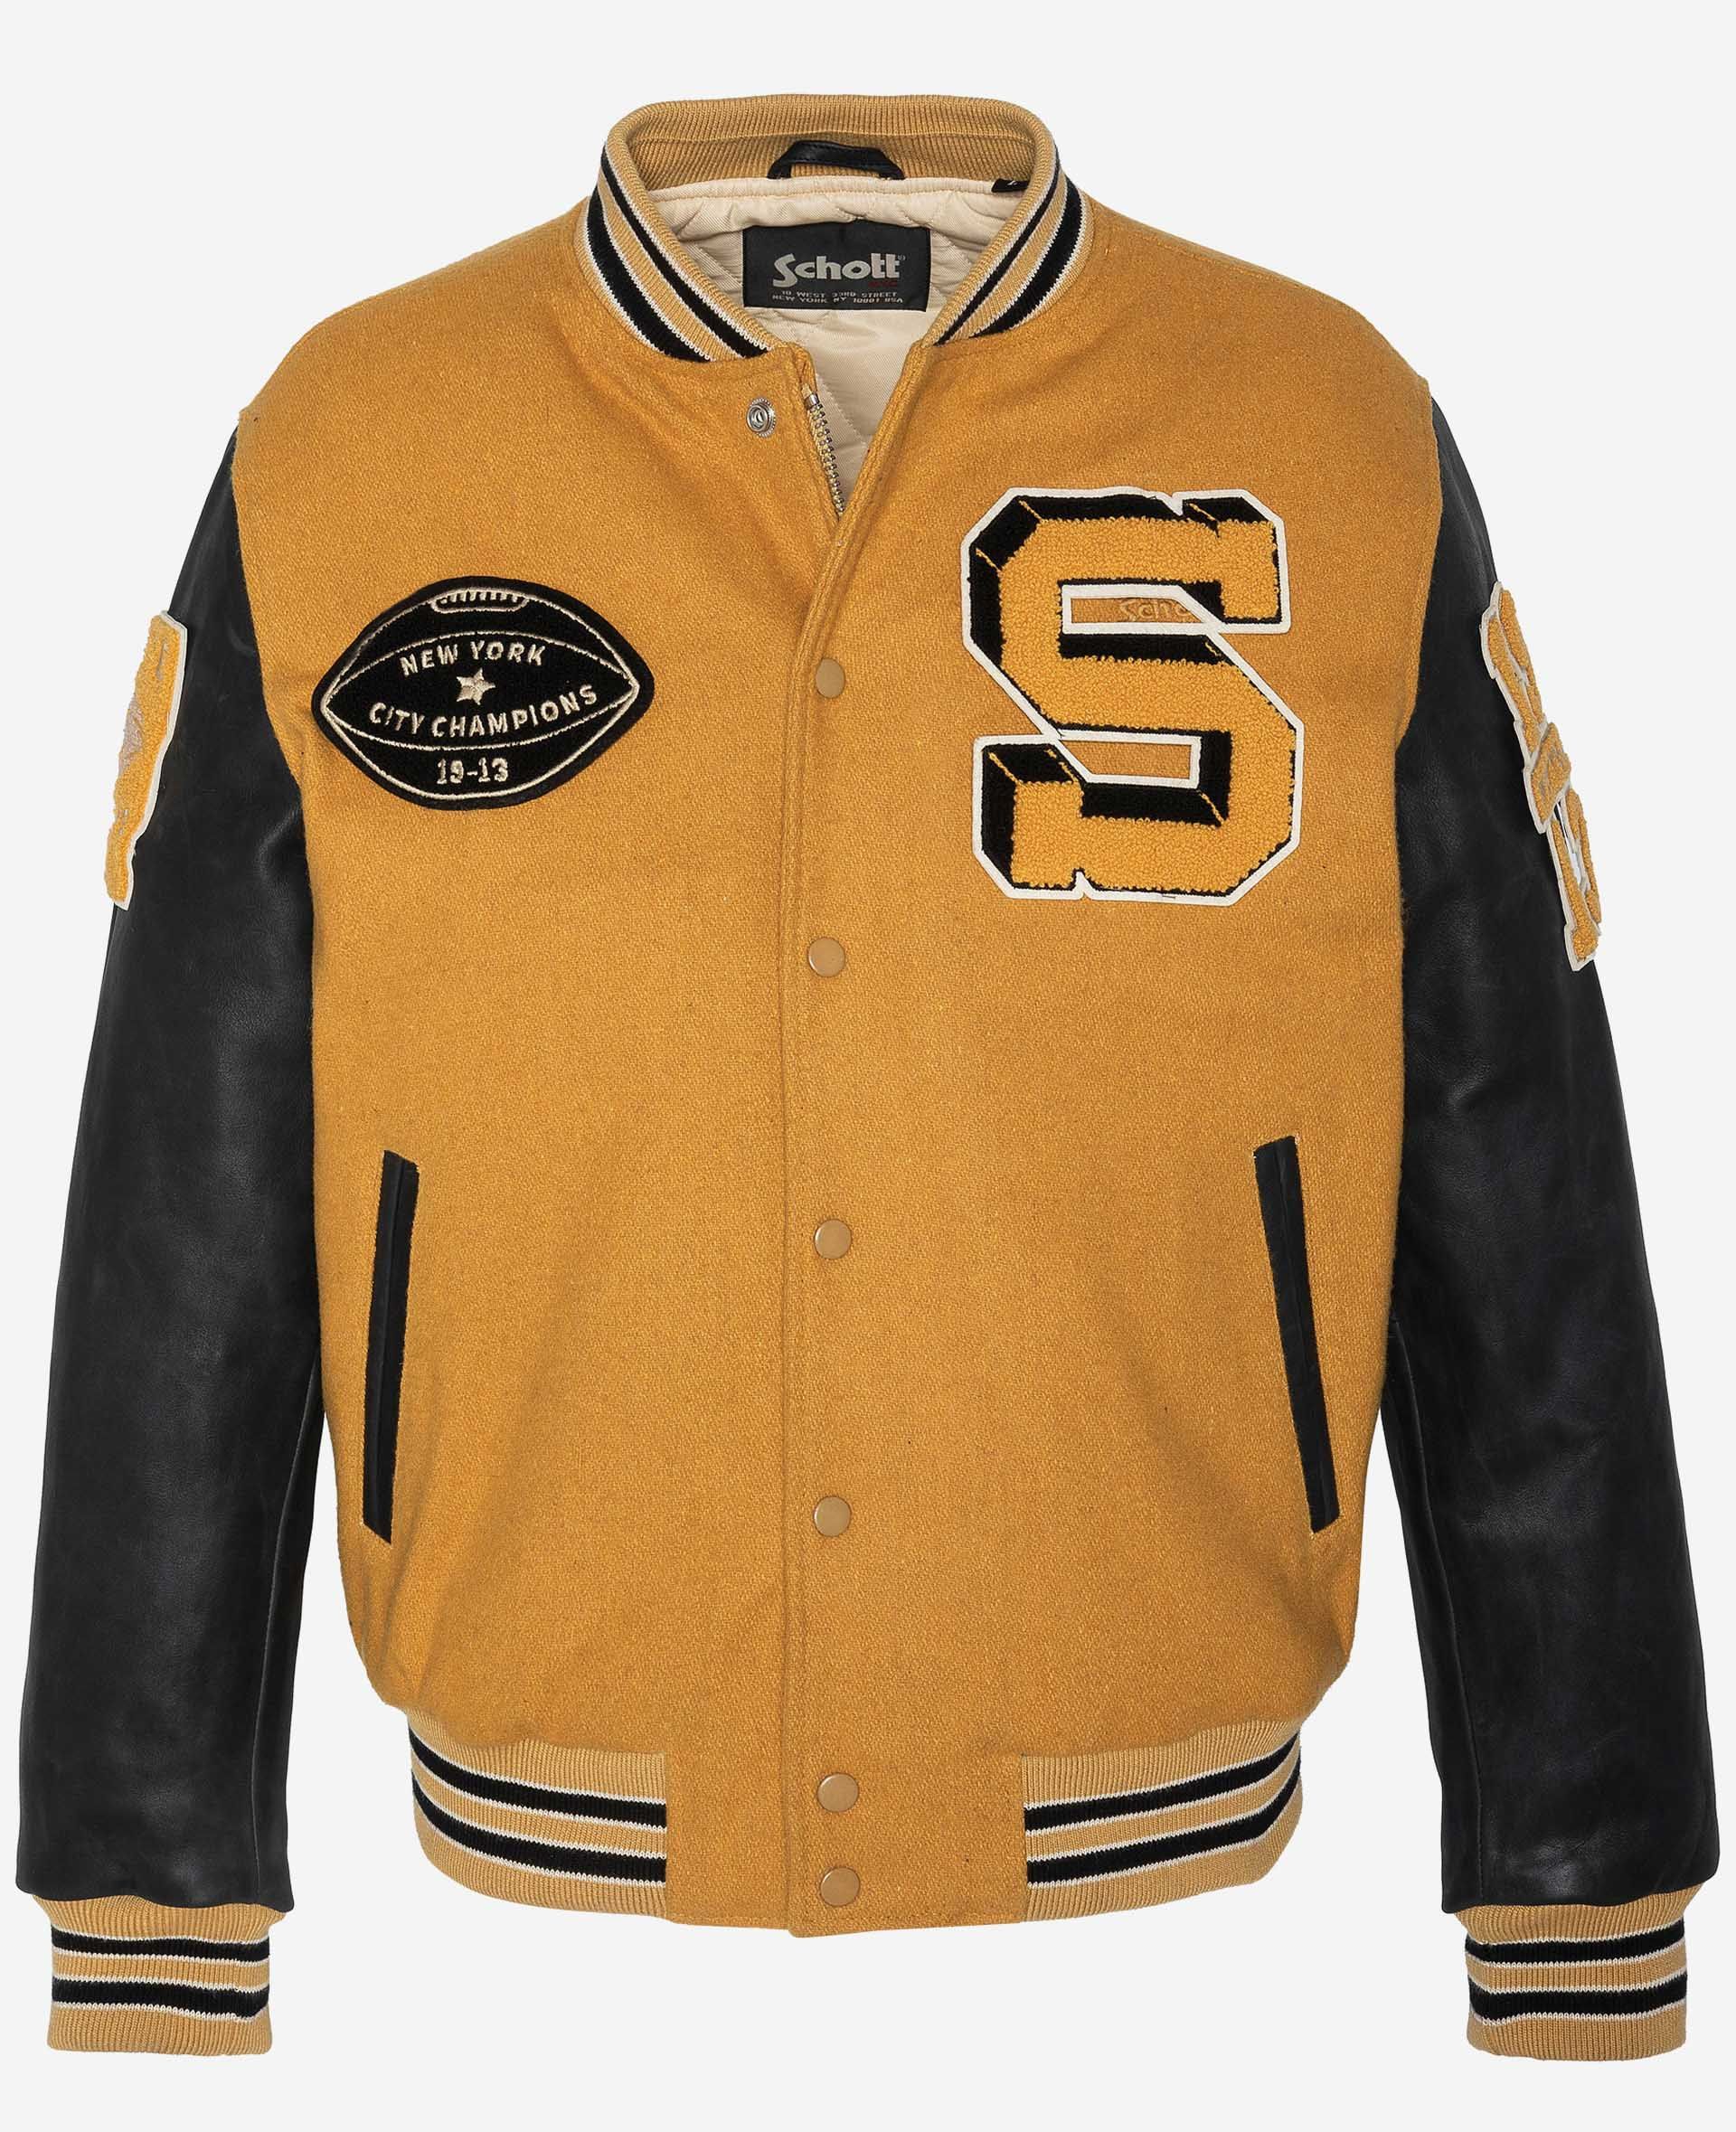 Schott NYC Varsity jacket, cowhide leather LCTEDDYBD2 - schottglyfada.gr